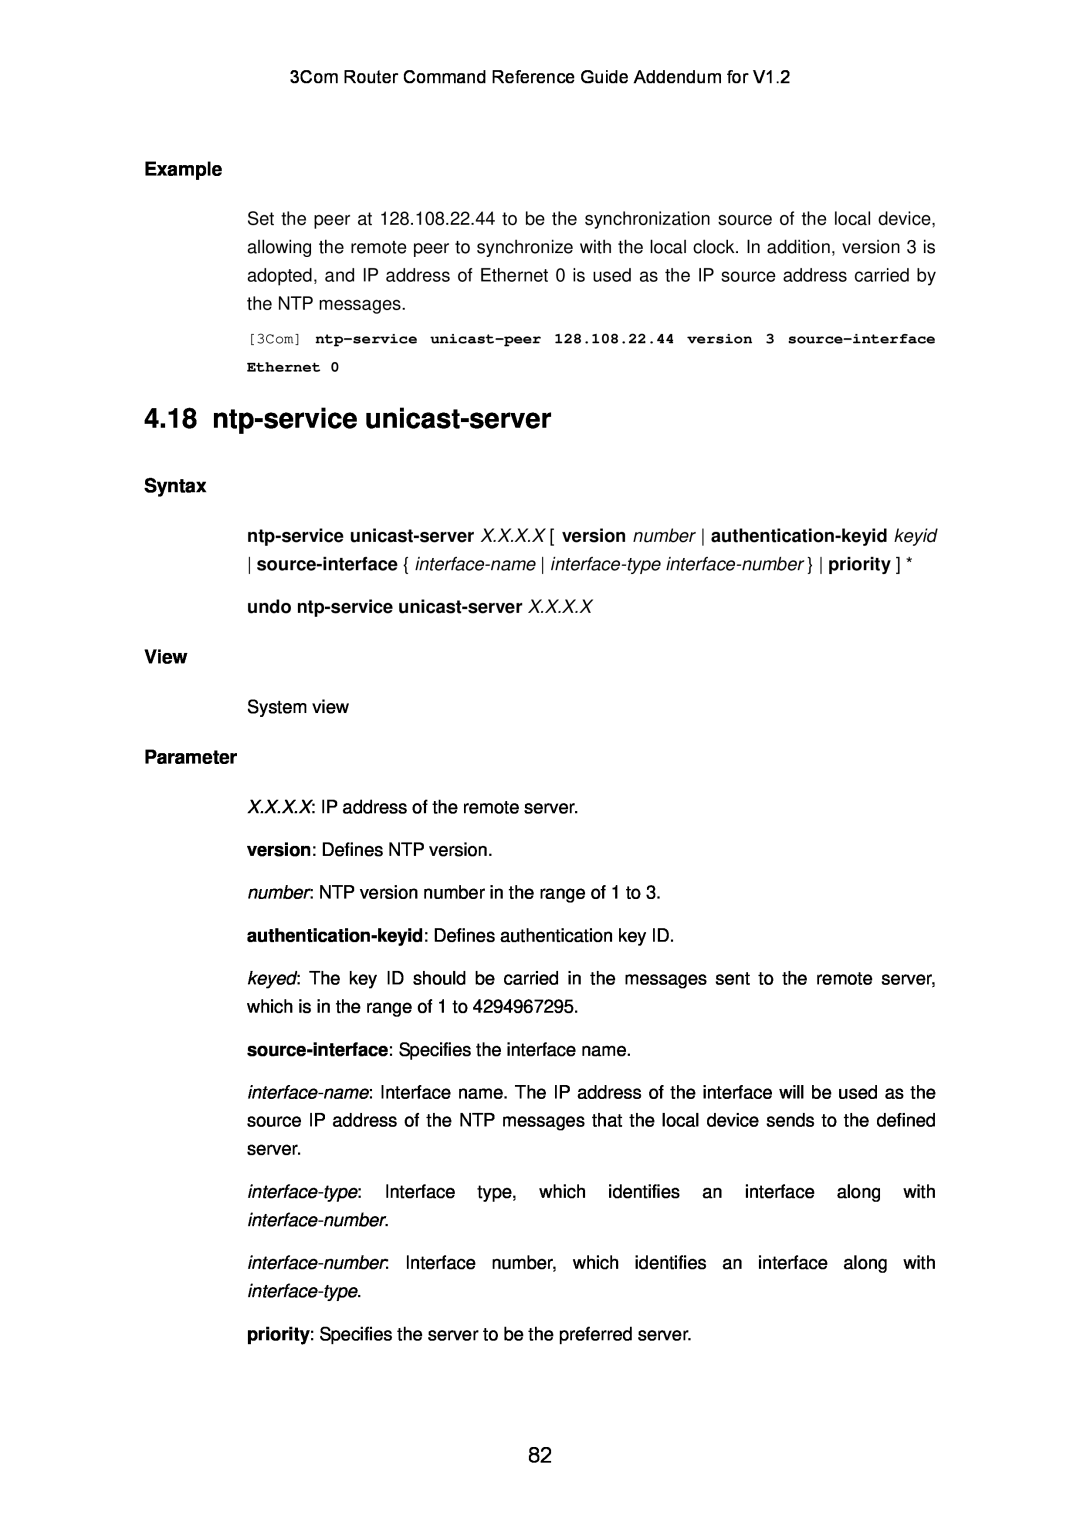 3Com 10014302 manual Example, Syntax, View, Parameter, undo ntp-service unicast-server 